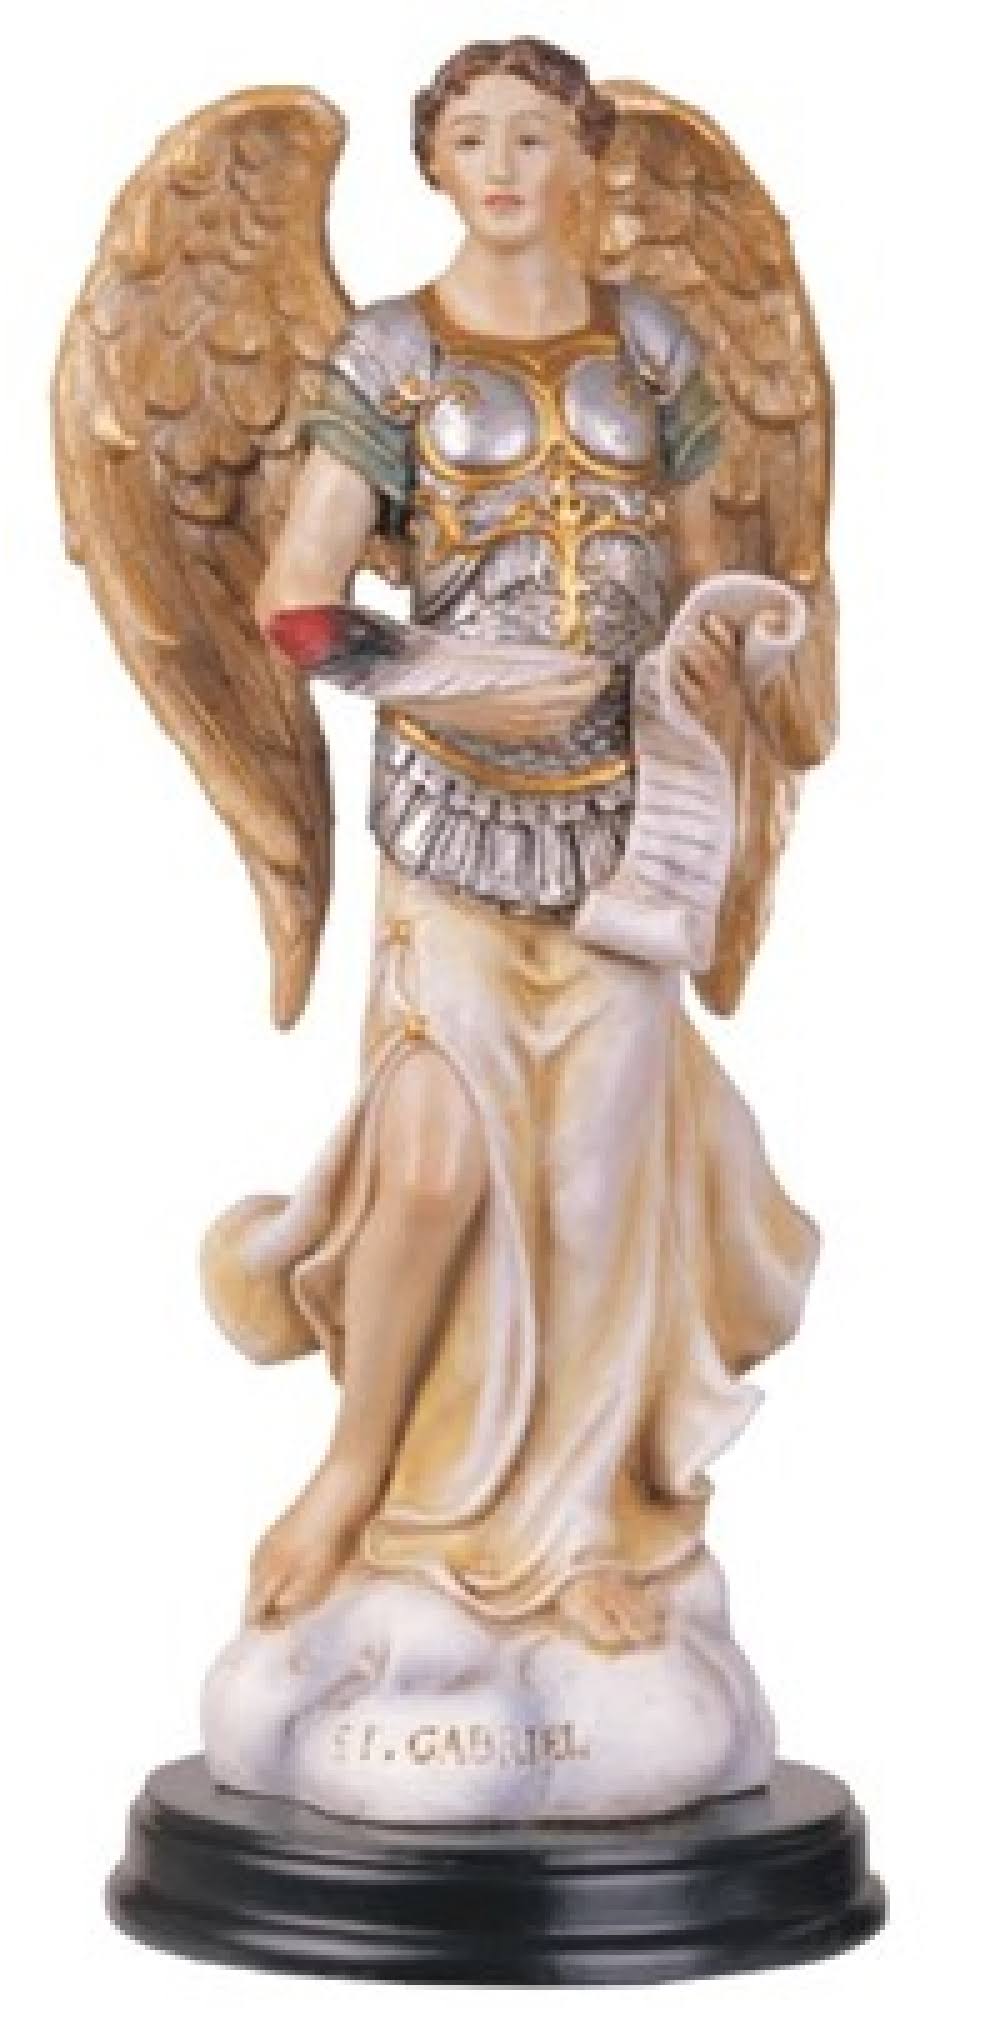 George S. Chen Imports Archangel Gabriel Holy Figurine Religious Decoration Statue 5"